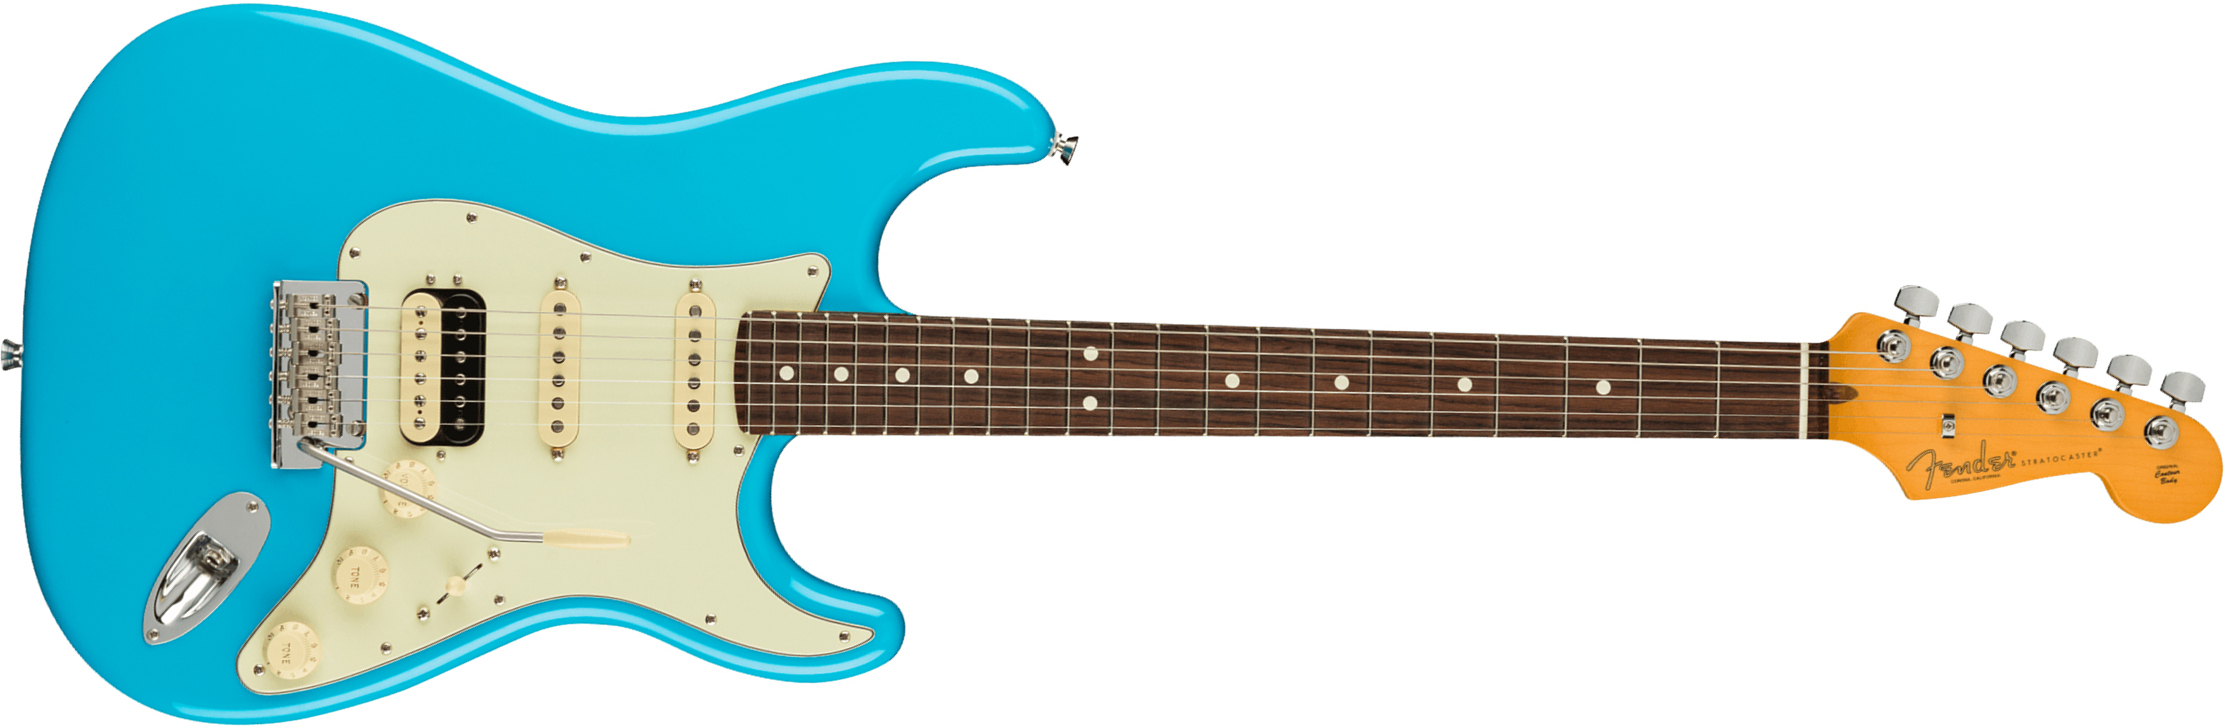 Fender Strat American Professional Ii Hss Usa Rw - Miami Blue - Str shape electric guitar - Main picture